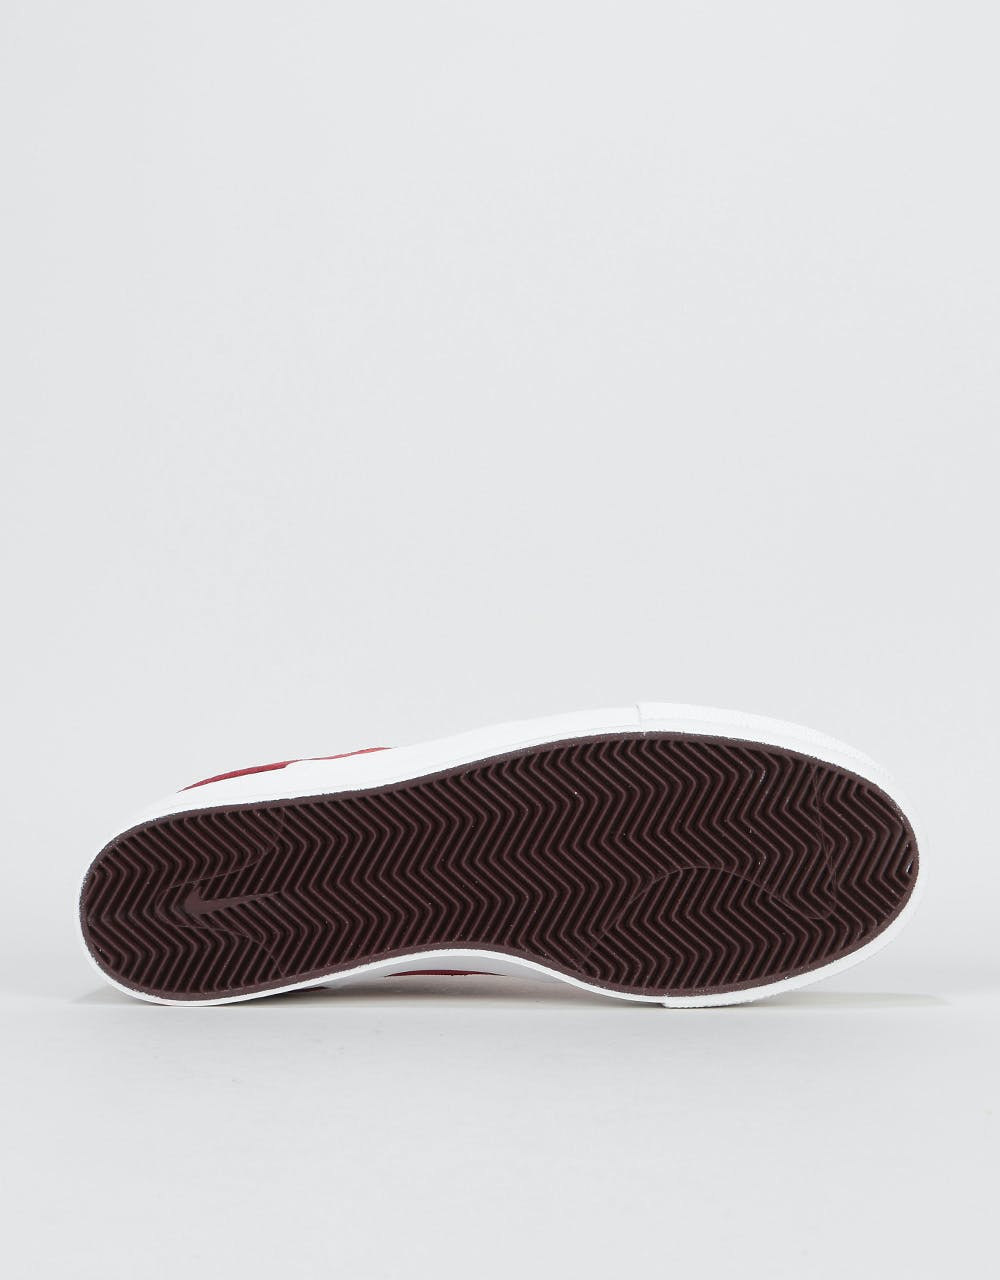 Nike SB Zoom Janoski RM Premium Skate Shoes - Cedar/Mahogany-Multi